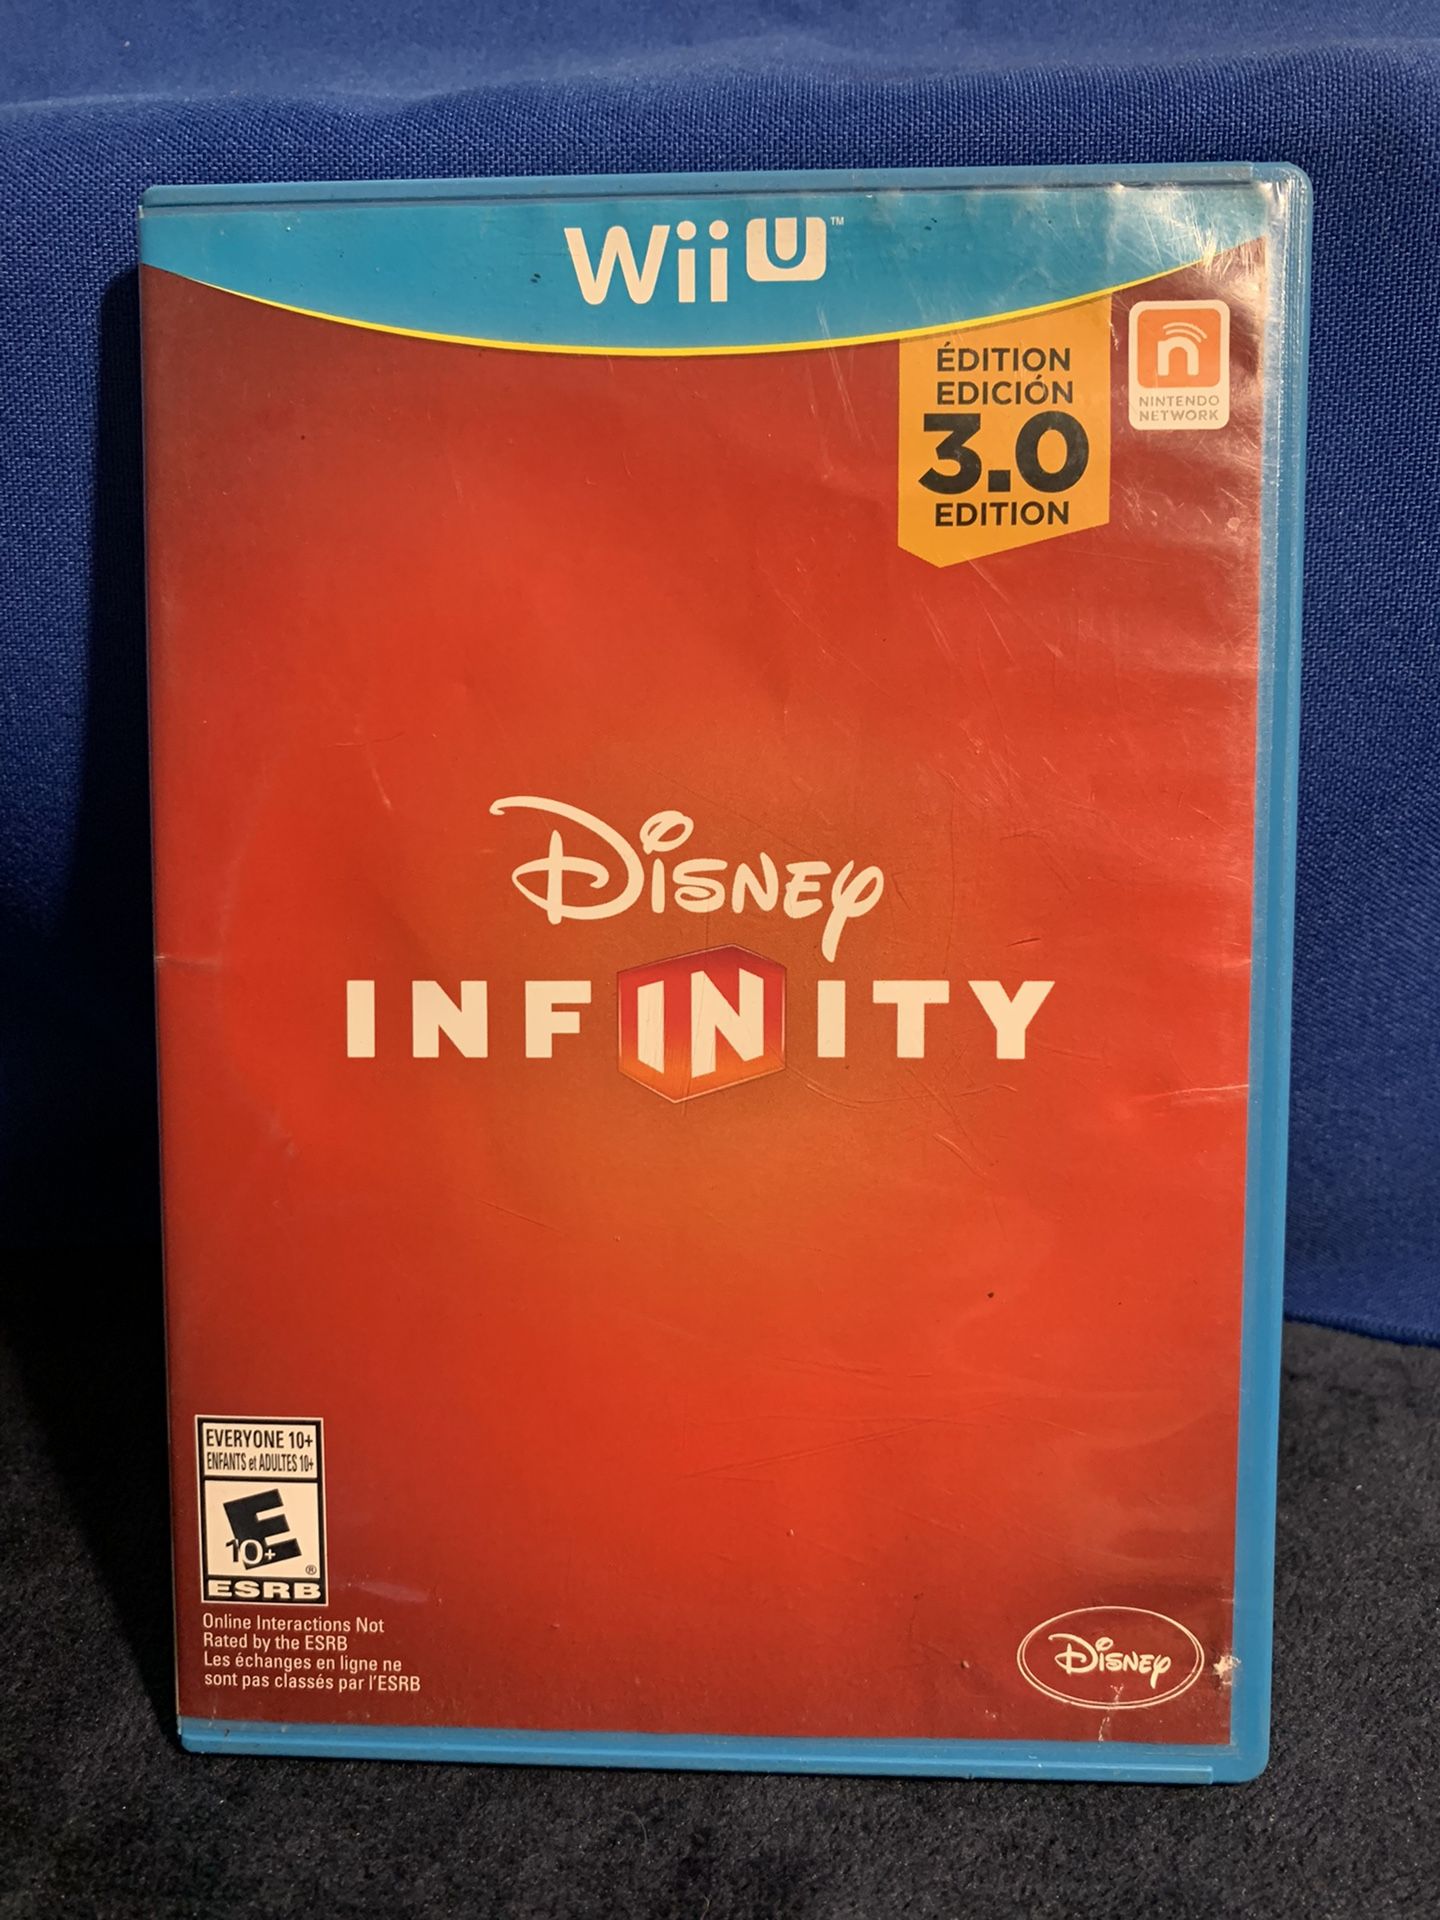 Disney infinity Nintendo wii u game